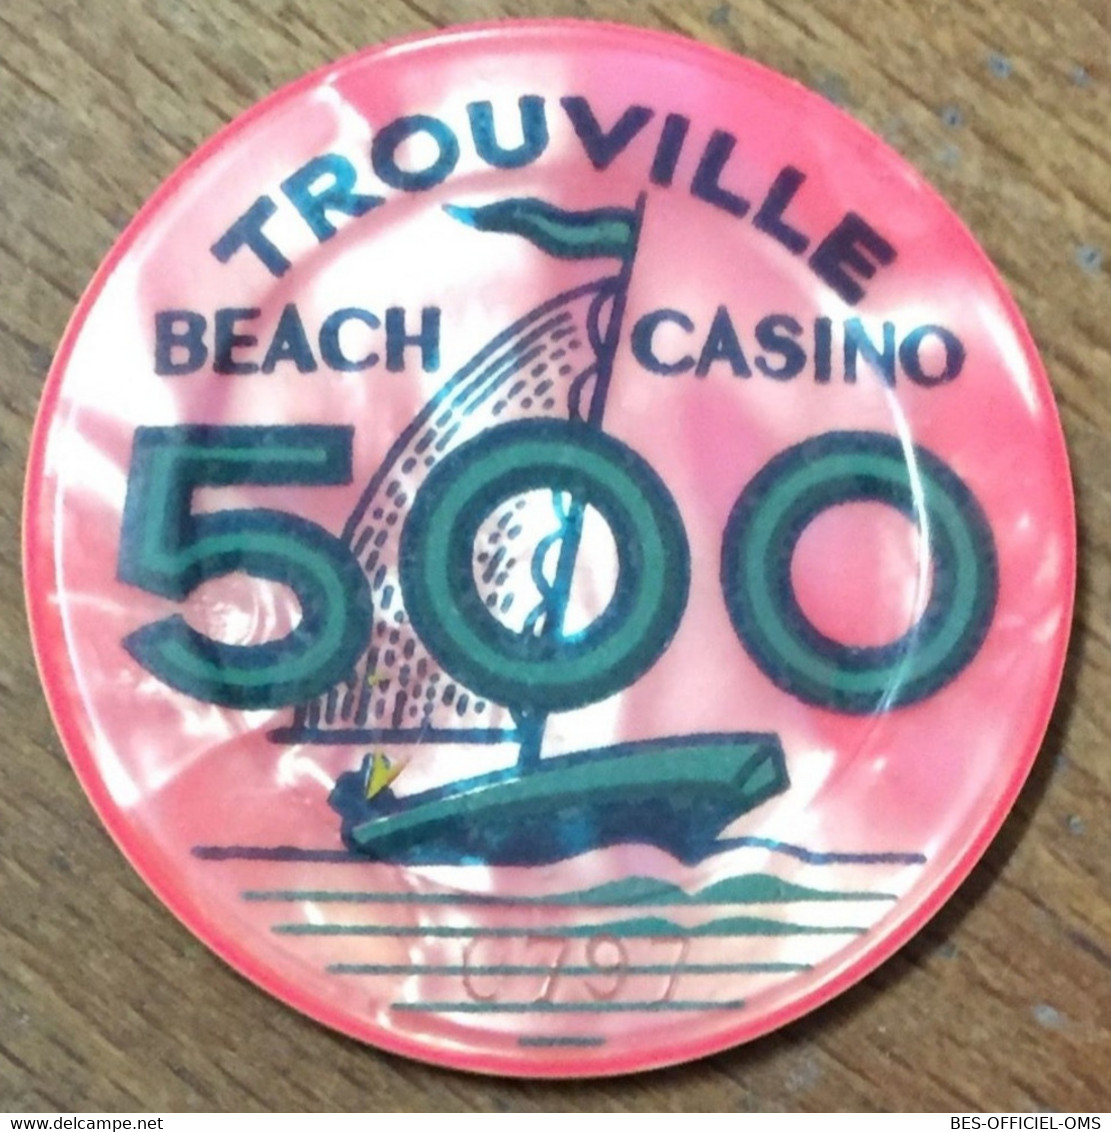 76 TROUVILLE BEACH CASINO JETON DE 500 ANCIENS FRANCS N° 0797 CHIP TOKENS COINS GAMING - Casino